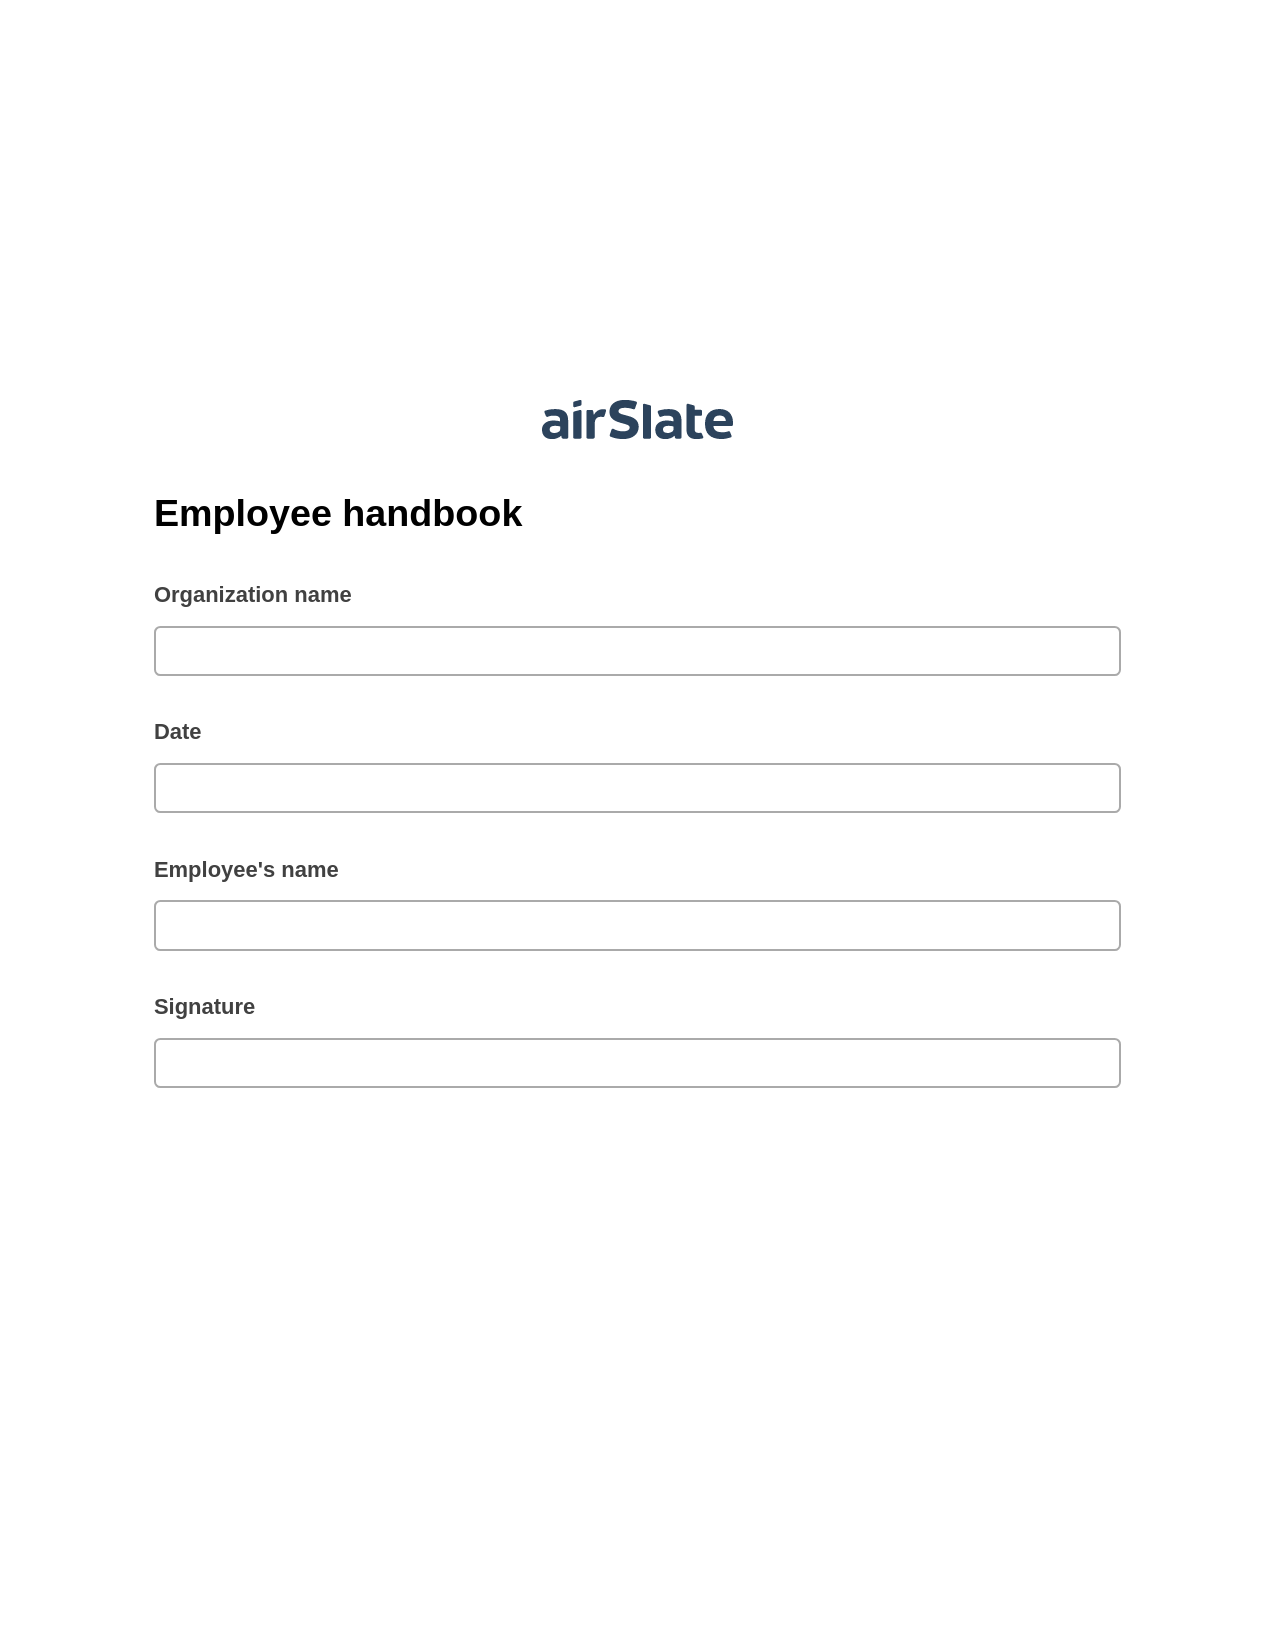 Employee handbook Pre-fill from Excel Spreadsheet Bot, Set Signature Type Bot, Box Bot